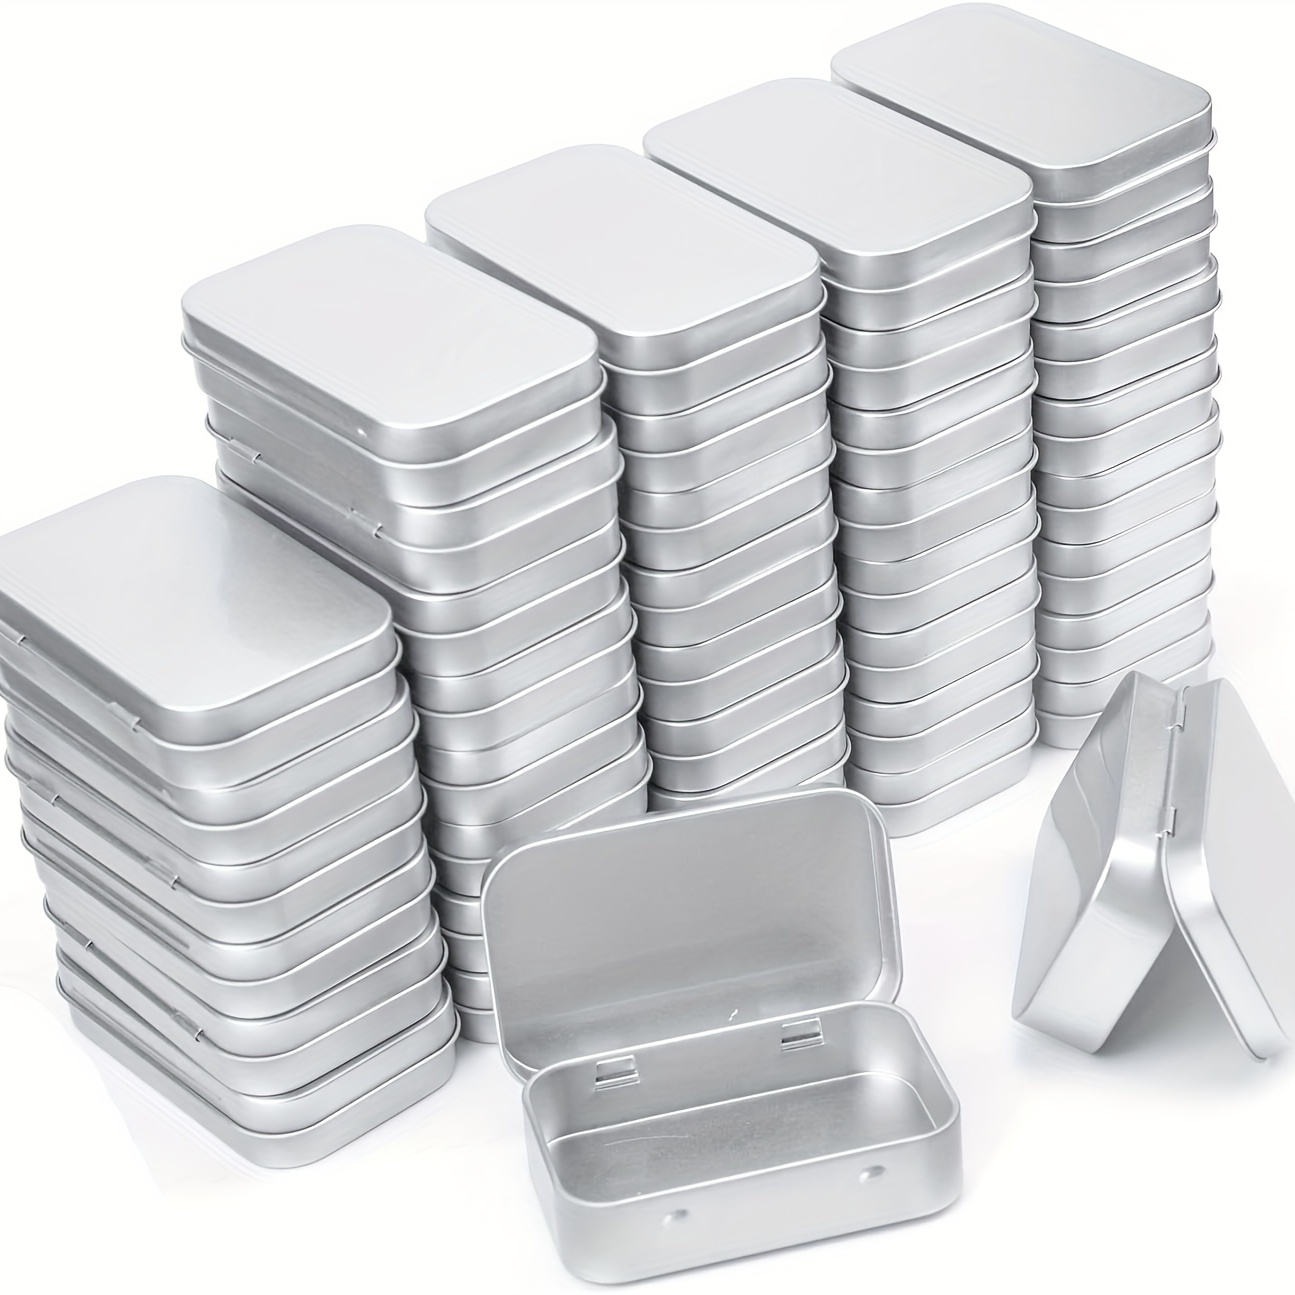 Mini cajas metálicas con bisagras para guardar tus tesoros